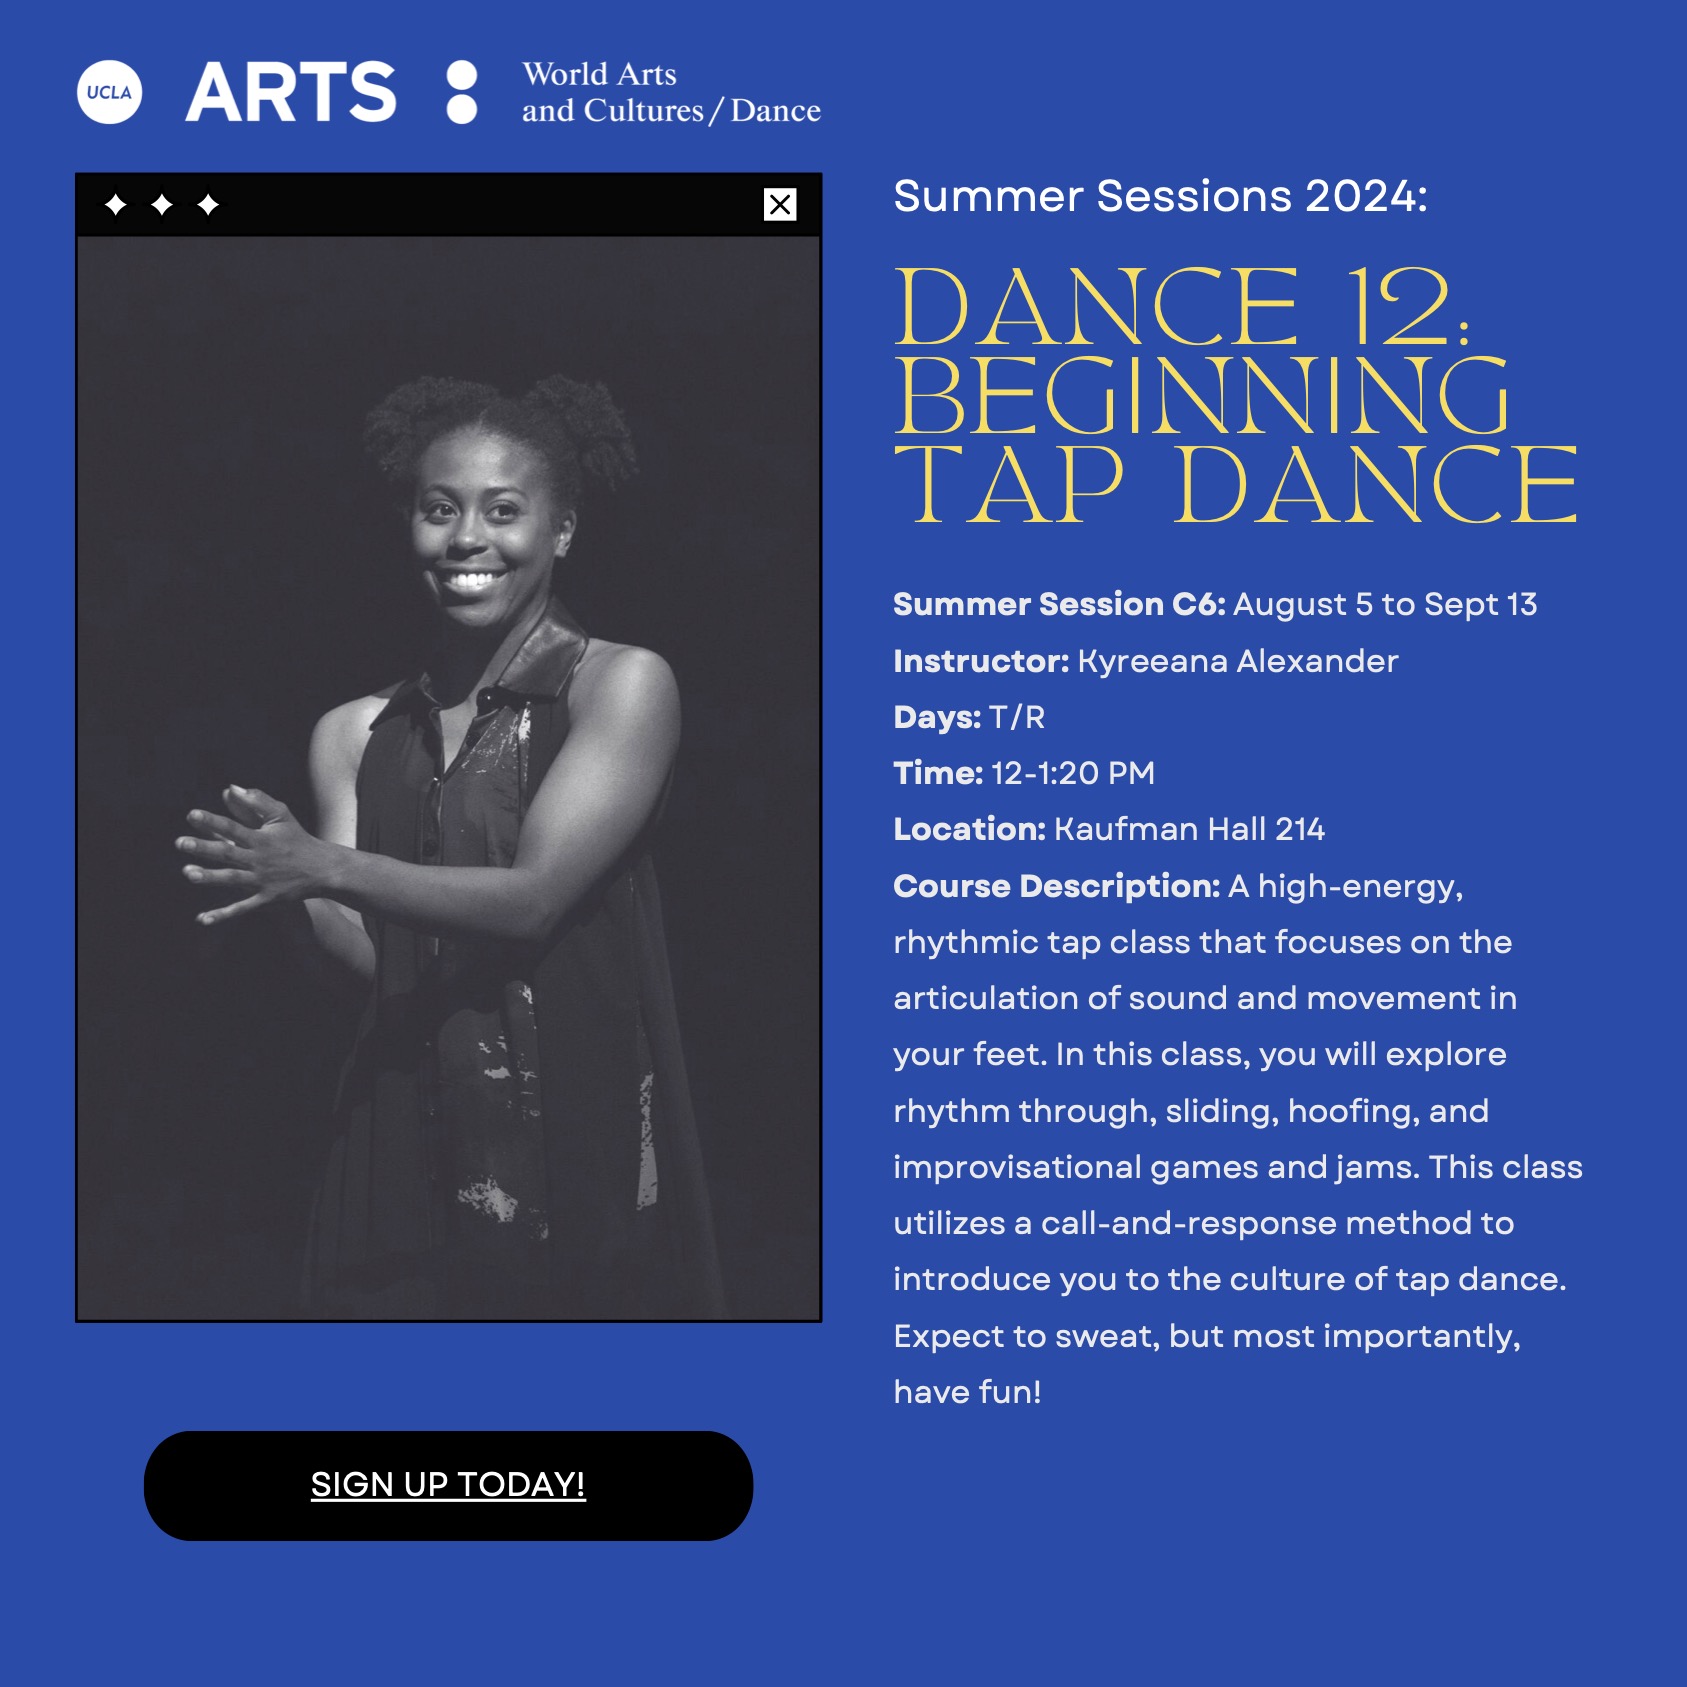 DANCE 12: Beginning Tap Dance